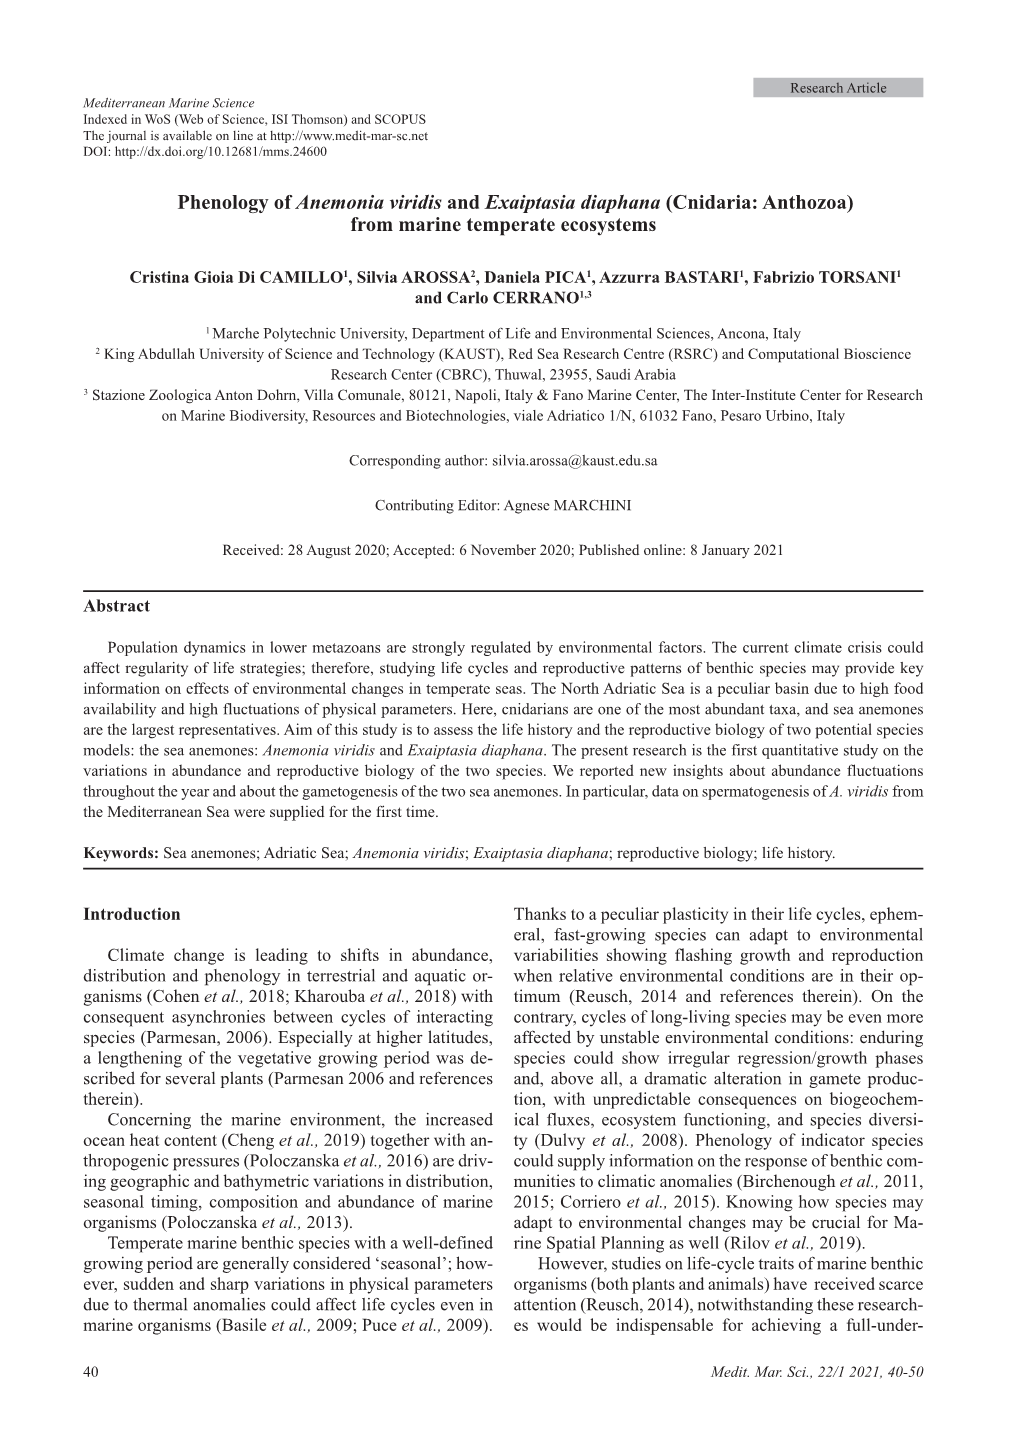 Phenology of Anemonia Viridis and Exaiptasia Diaphana (Cnidaria: Anthozoa) from Marine Temperate Ecosystems